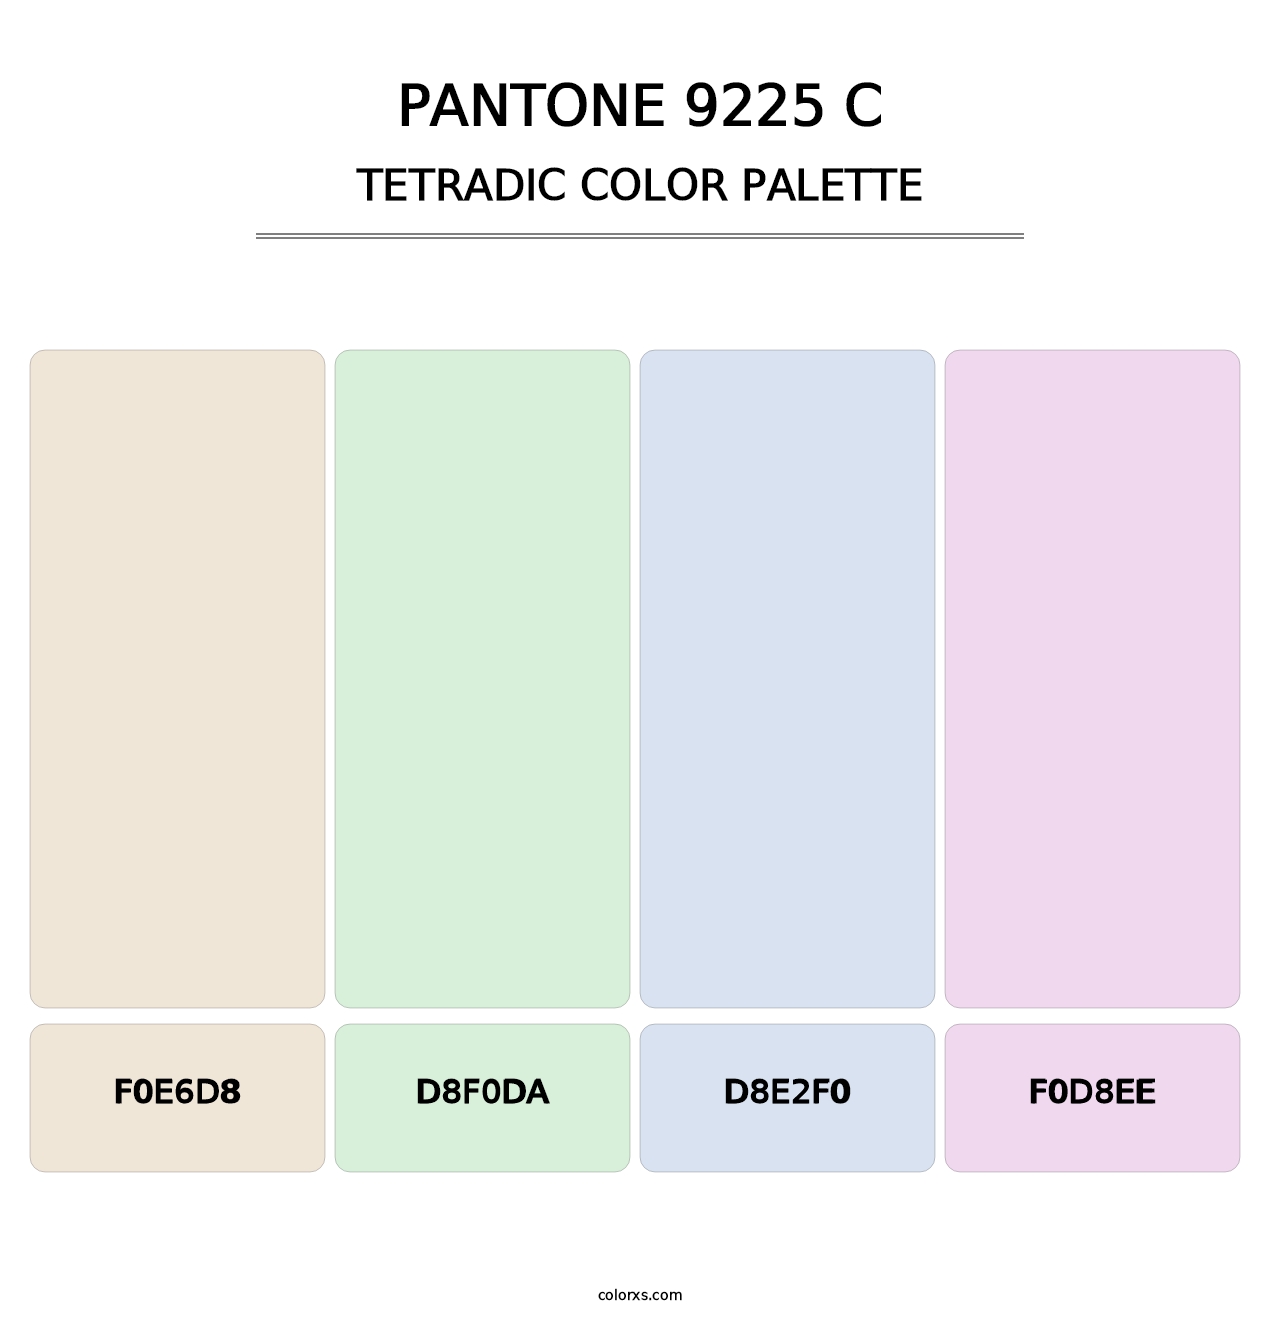 PANTONE 9225 C - Tetradic Color Palette